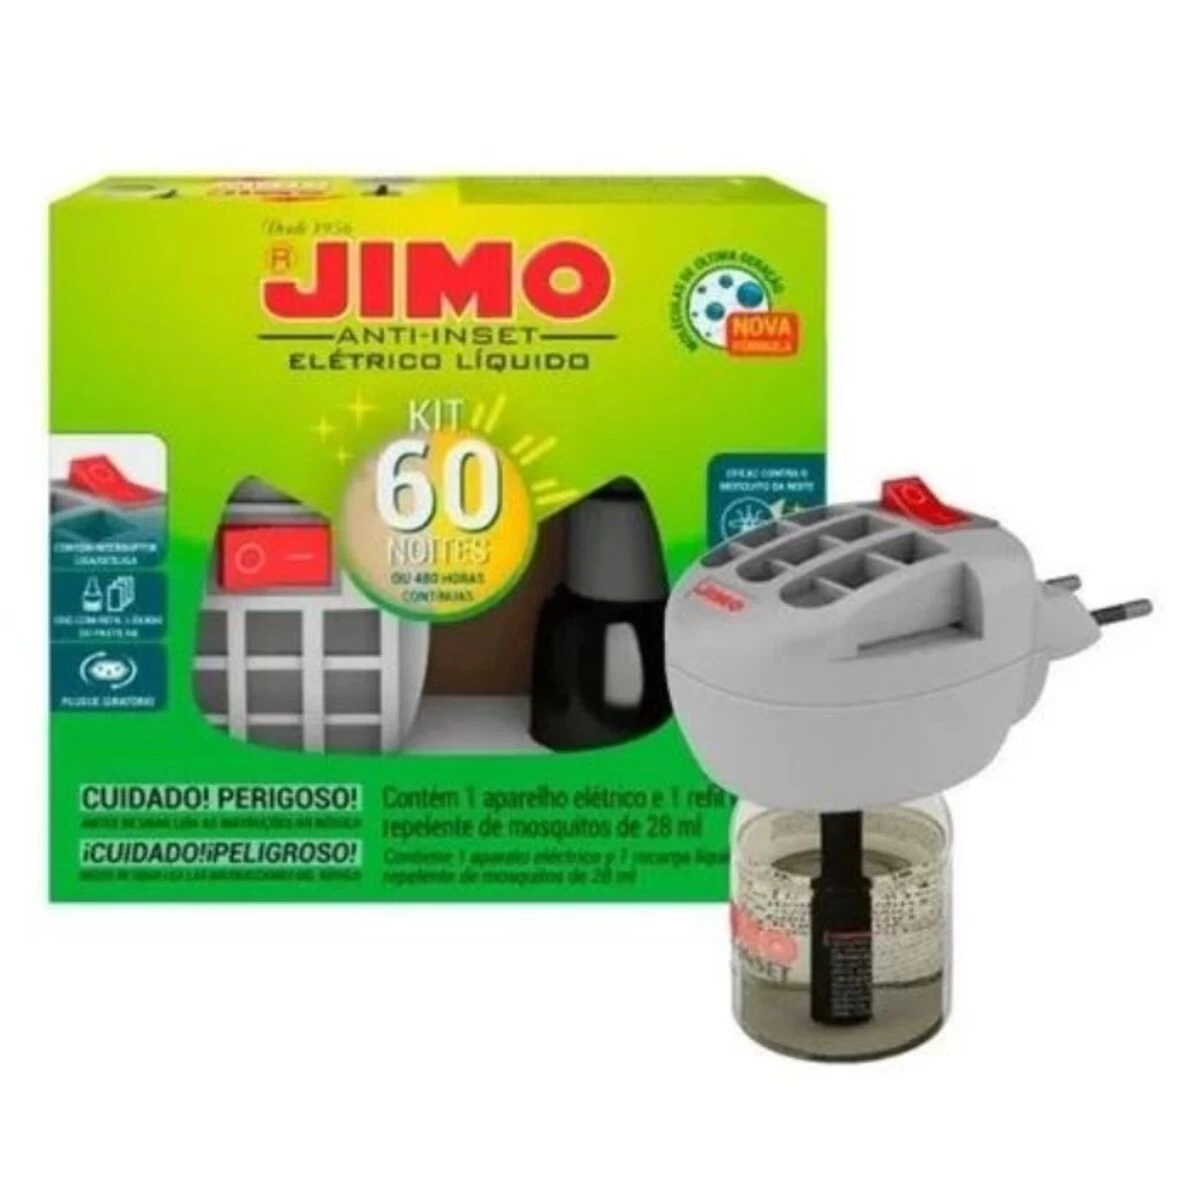 jimo-anti-inset-kit-electrico-y-liquido